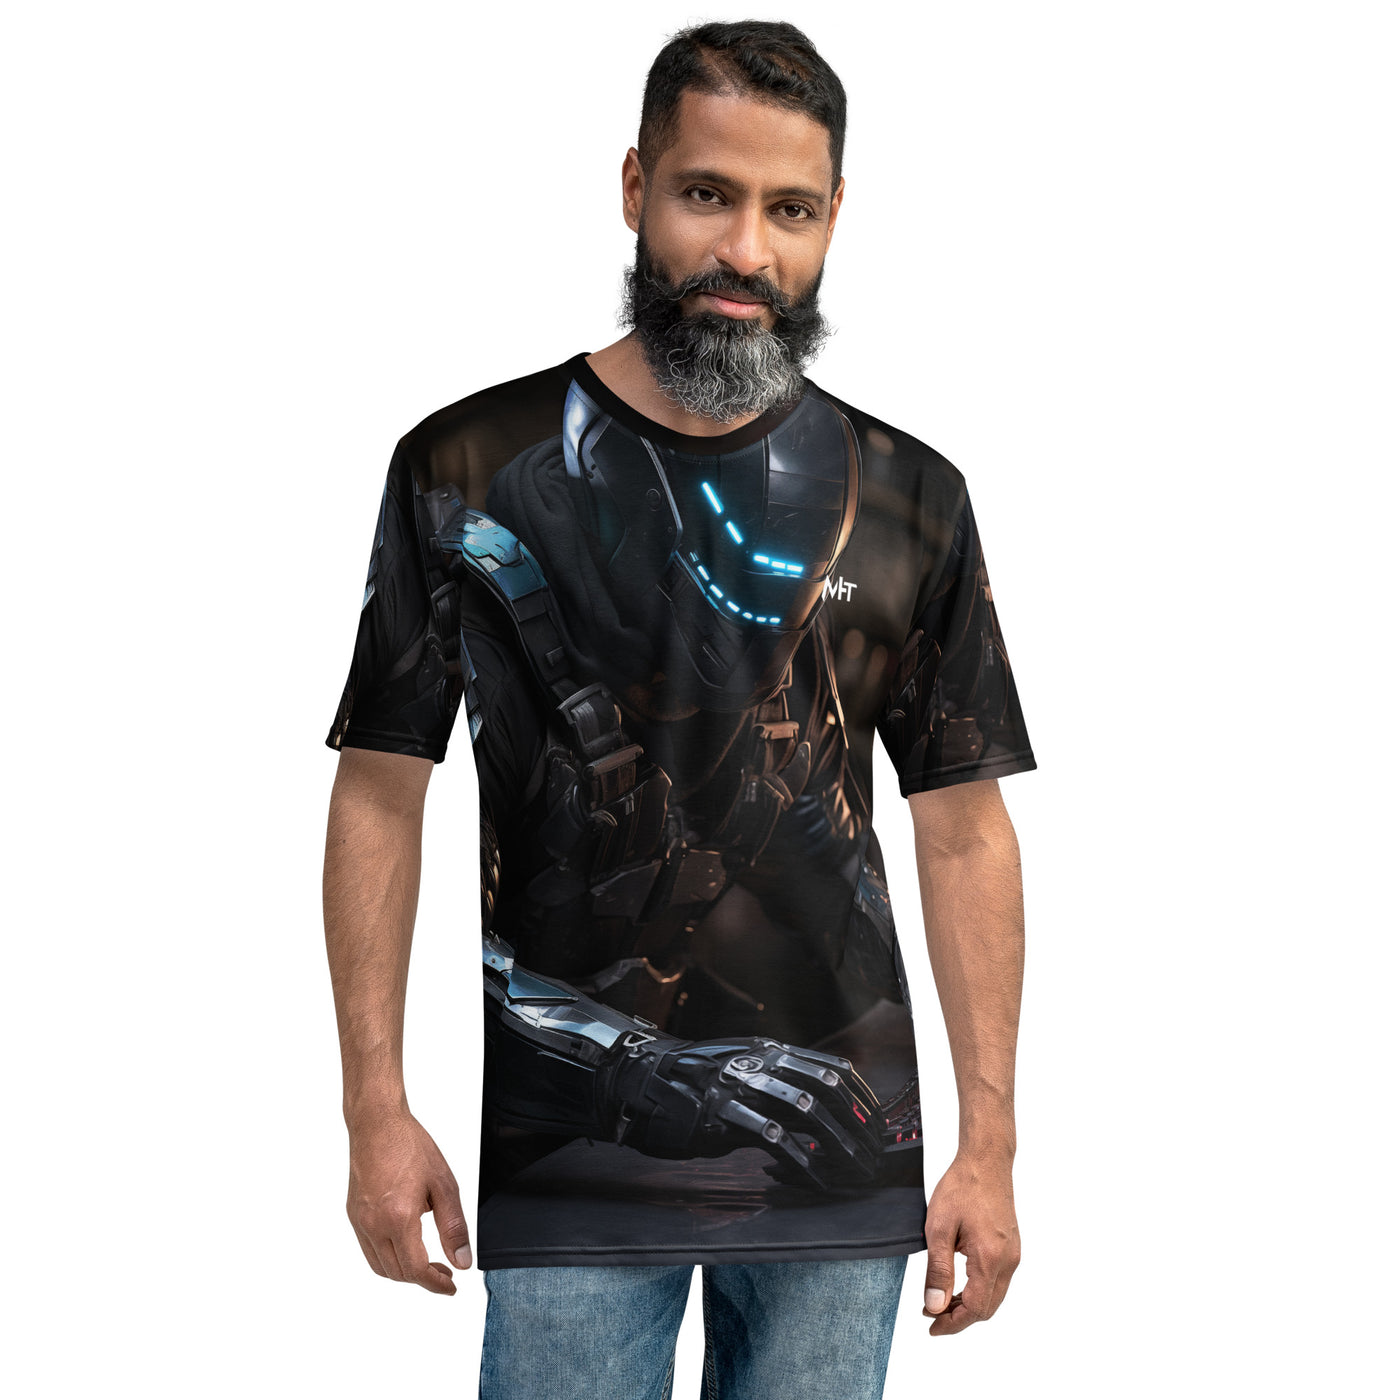 CyberArms Warrior v9 - Men's t-shirt